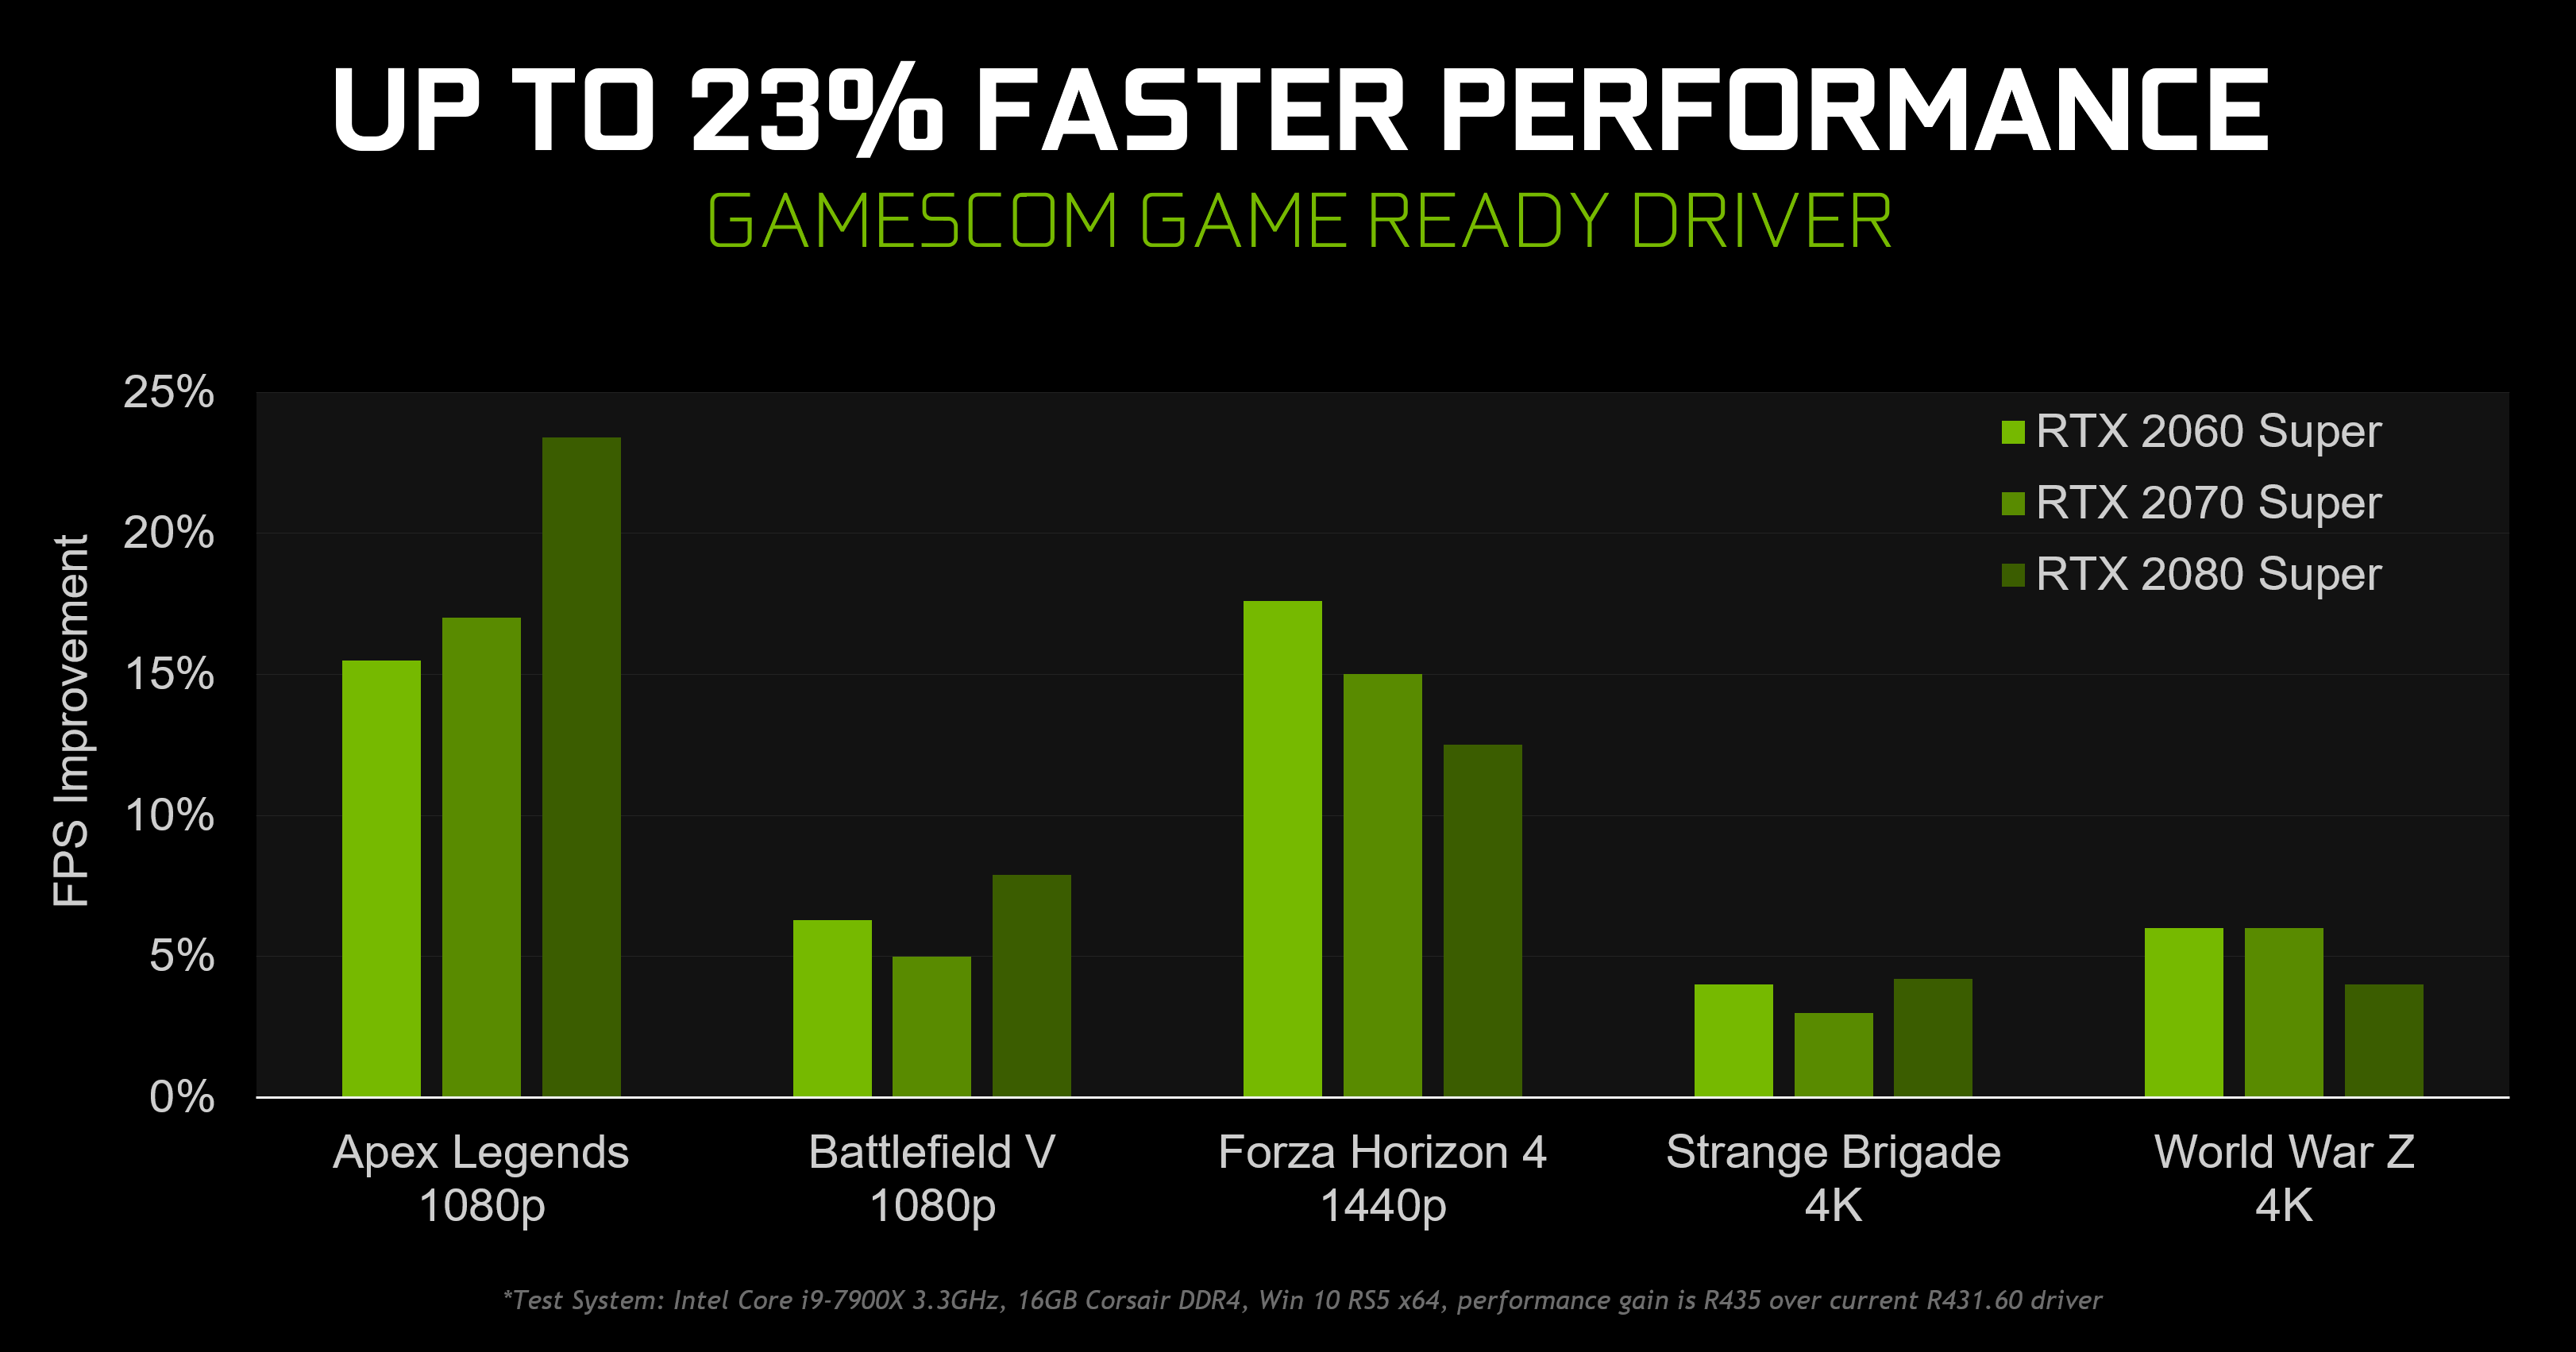 Gamescom Game Ready Driver Improves 